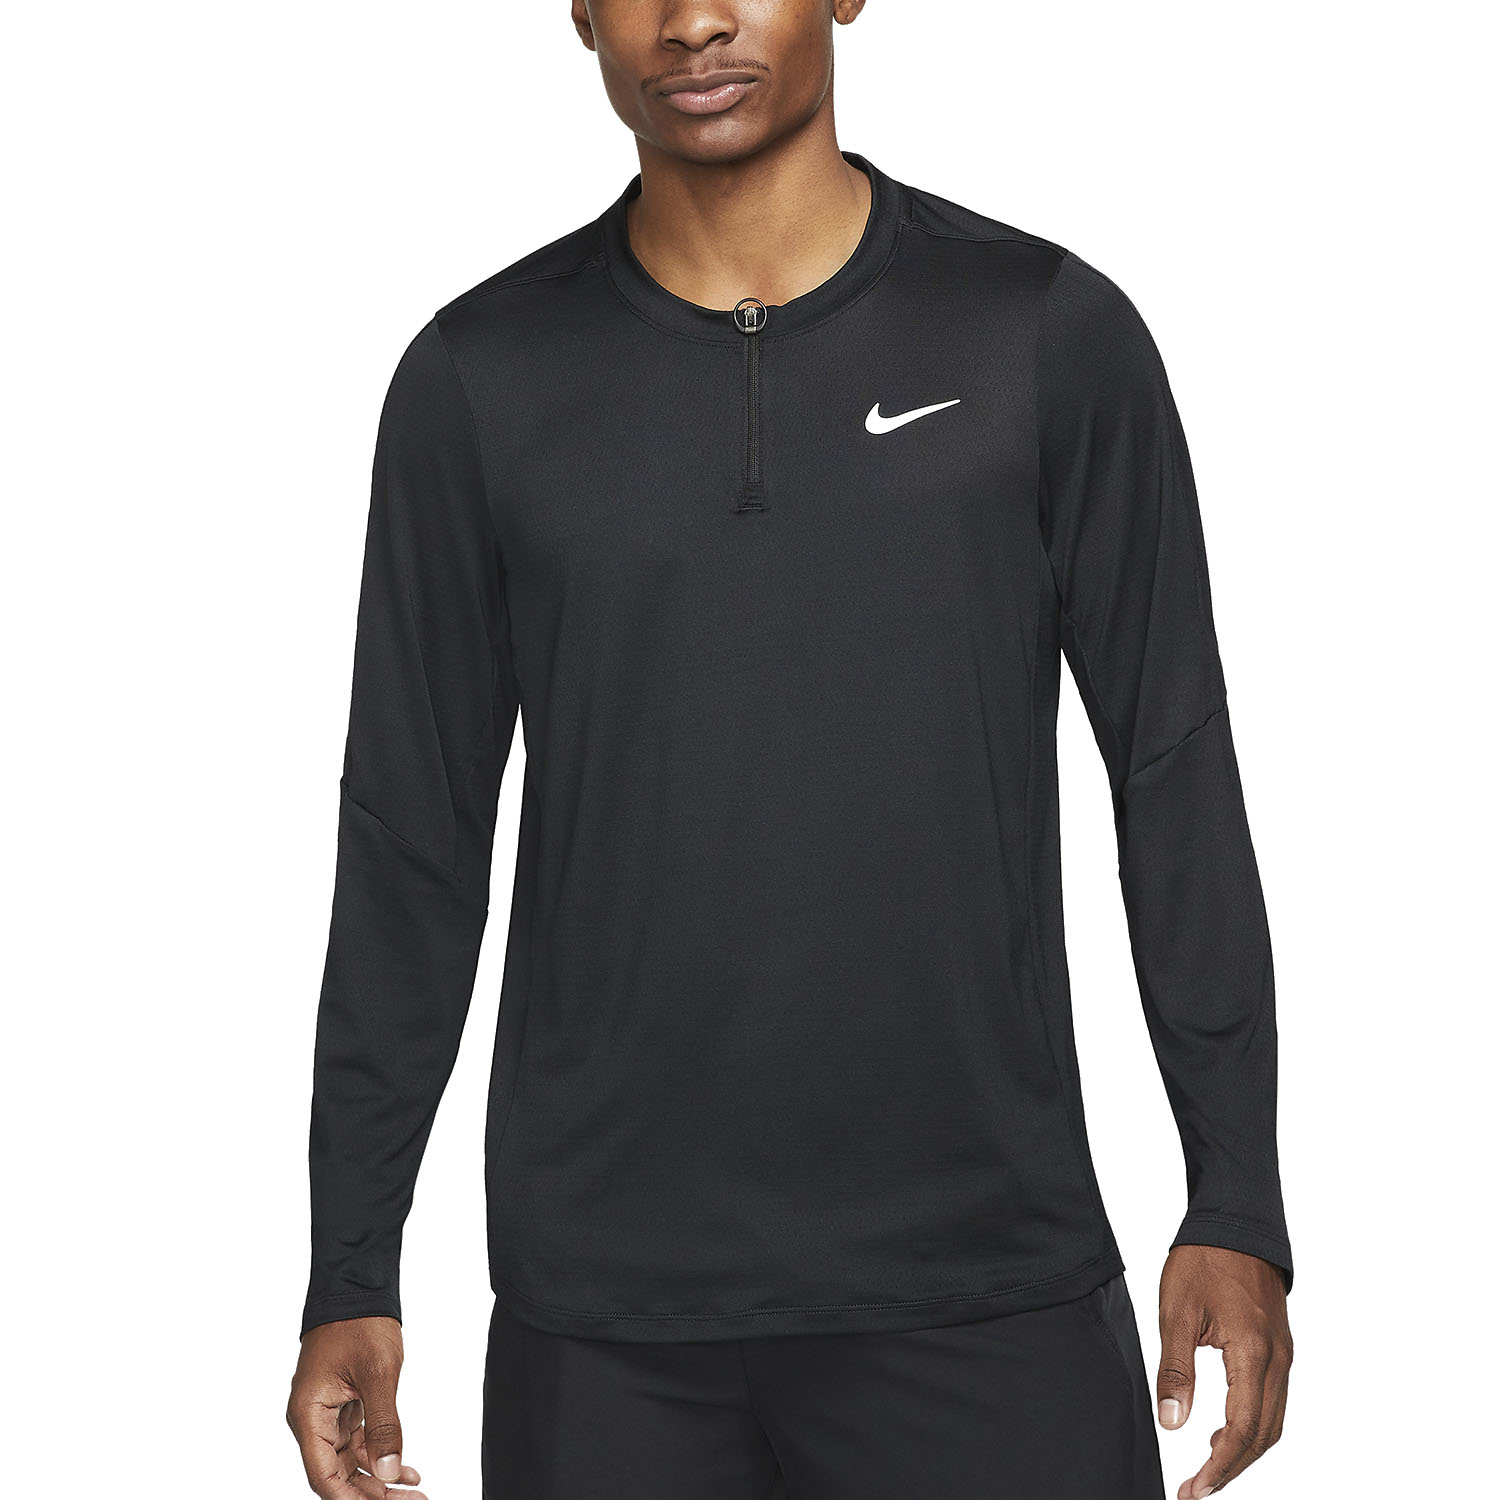 Nike Dri-FIT Advantage Camisa - Black/White